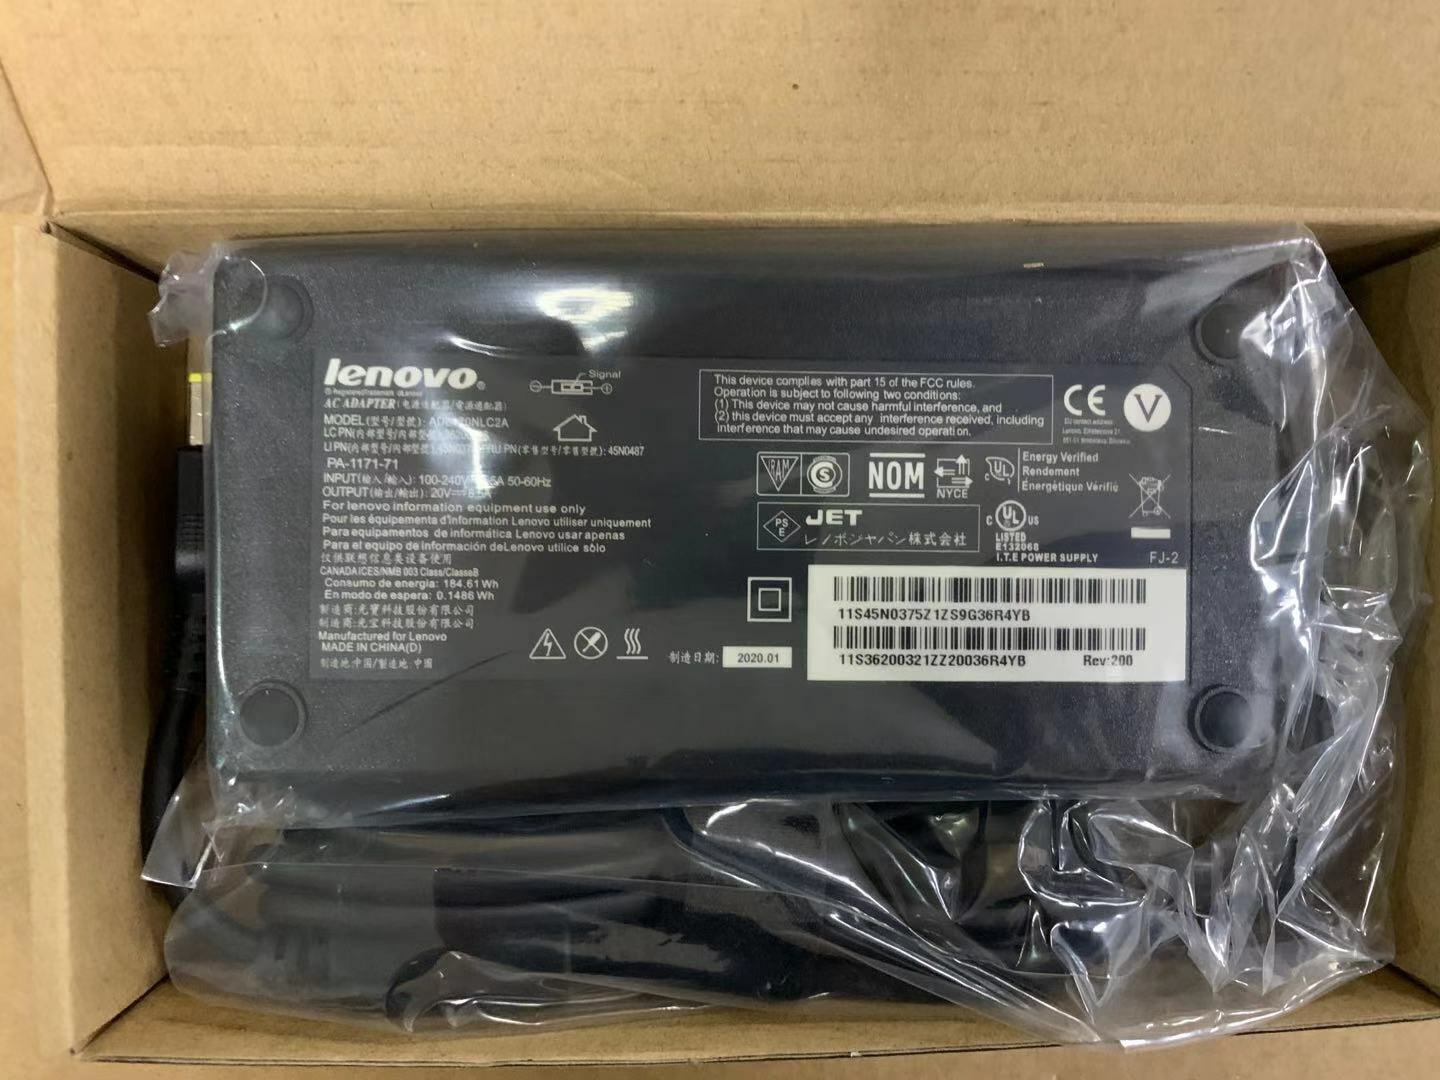 Original AC adapter Charger Lenovo ThinkPad W541 W540 8.5A 20V 170W Power Supply